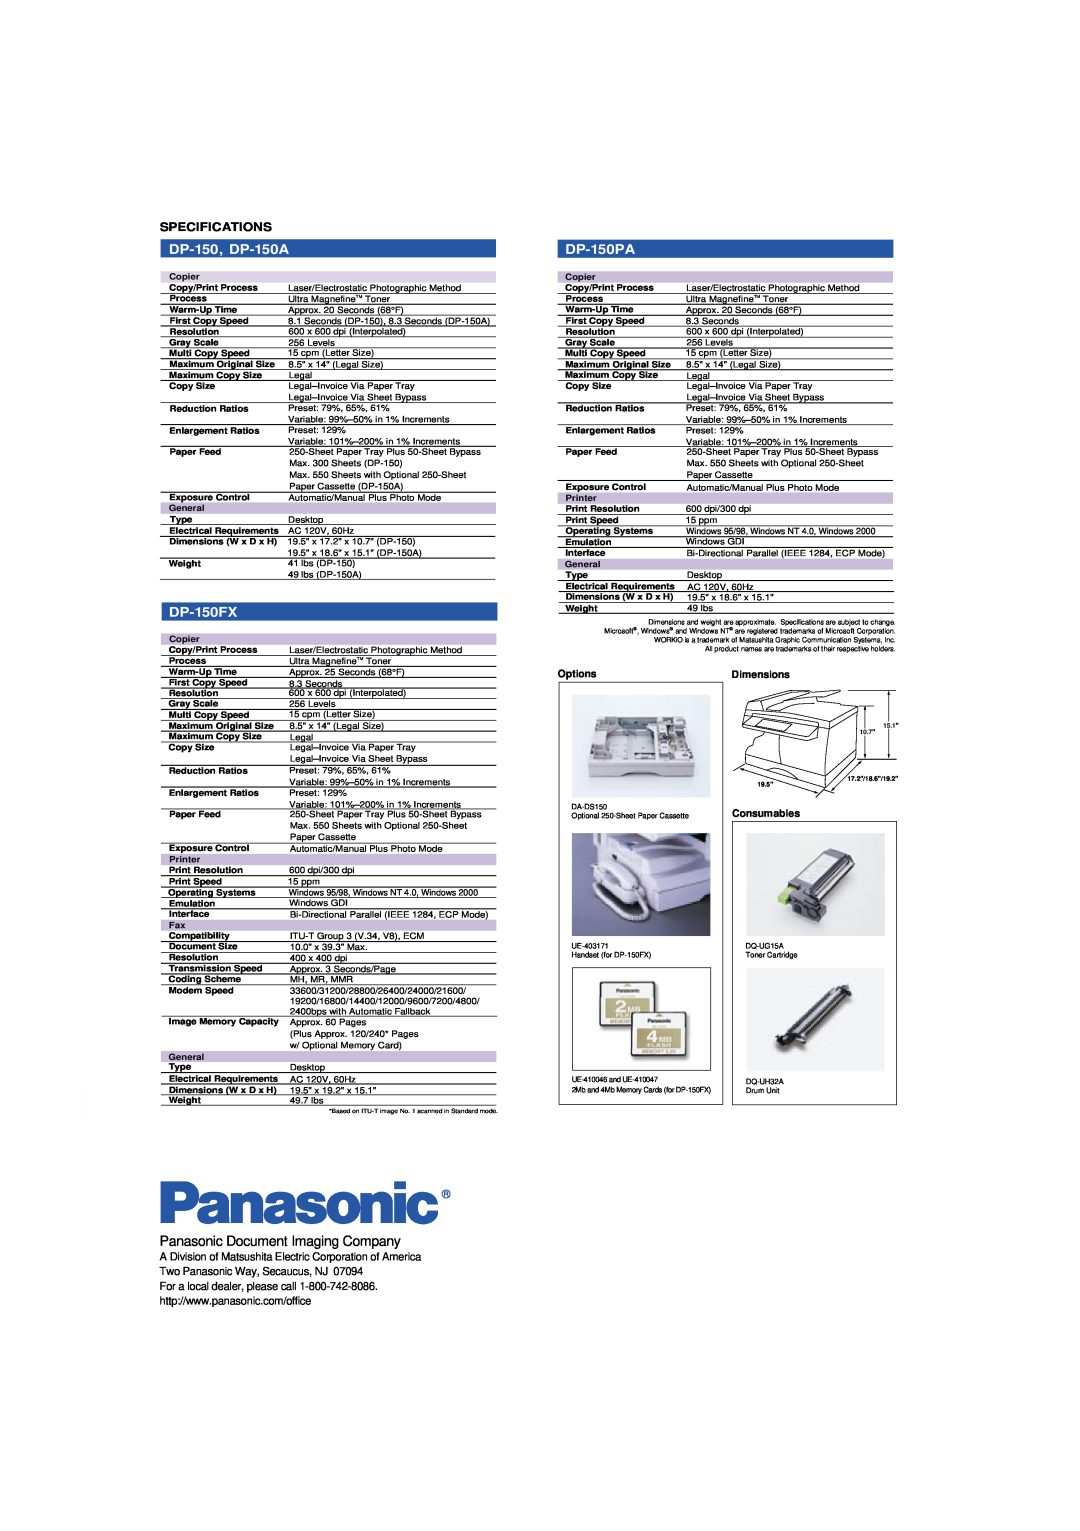 Panasonic Panasonic Document Imaging Company, DP-150, DP-150A, DP-150FX, DP-150PA, Specifications, Options, Dimensions 